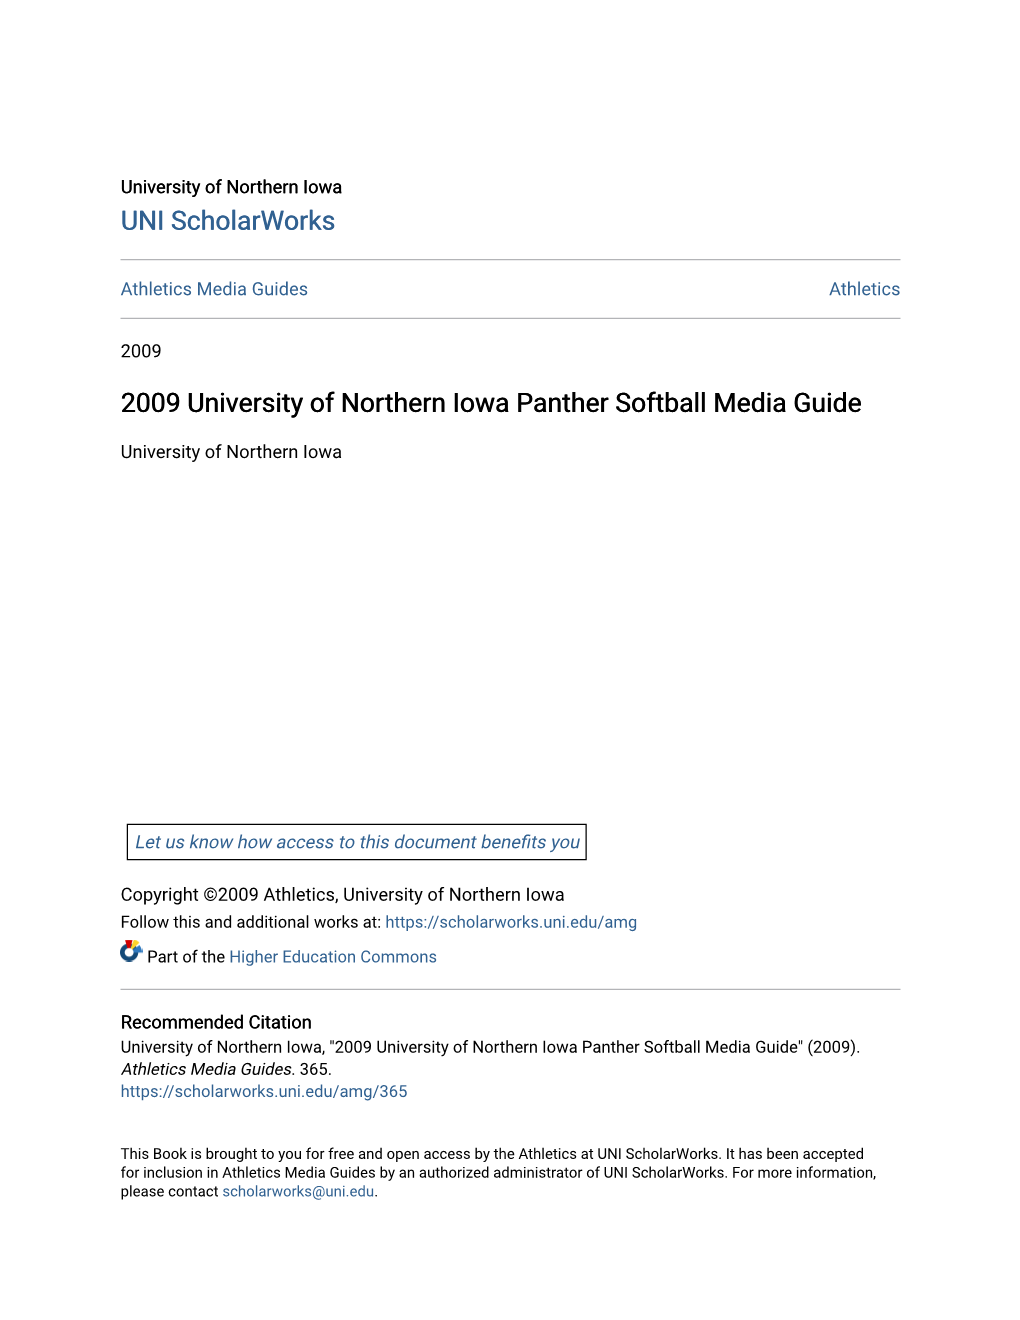 2009 University of Northern Iowa Panther Softball Media Guide